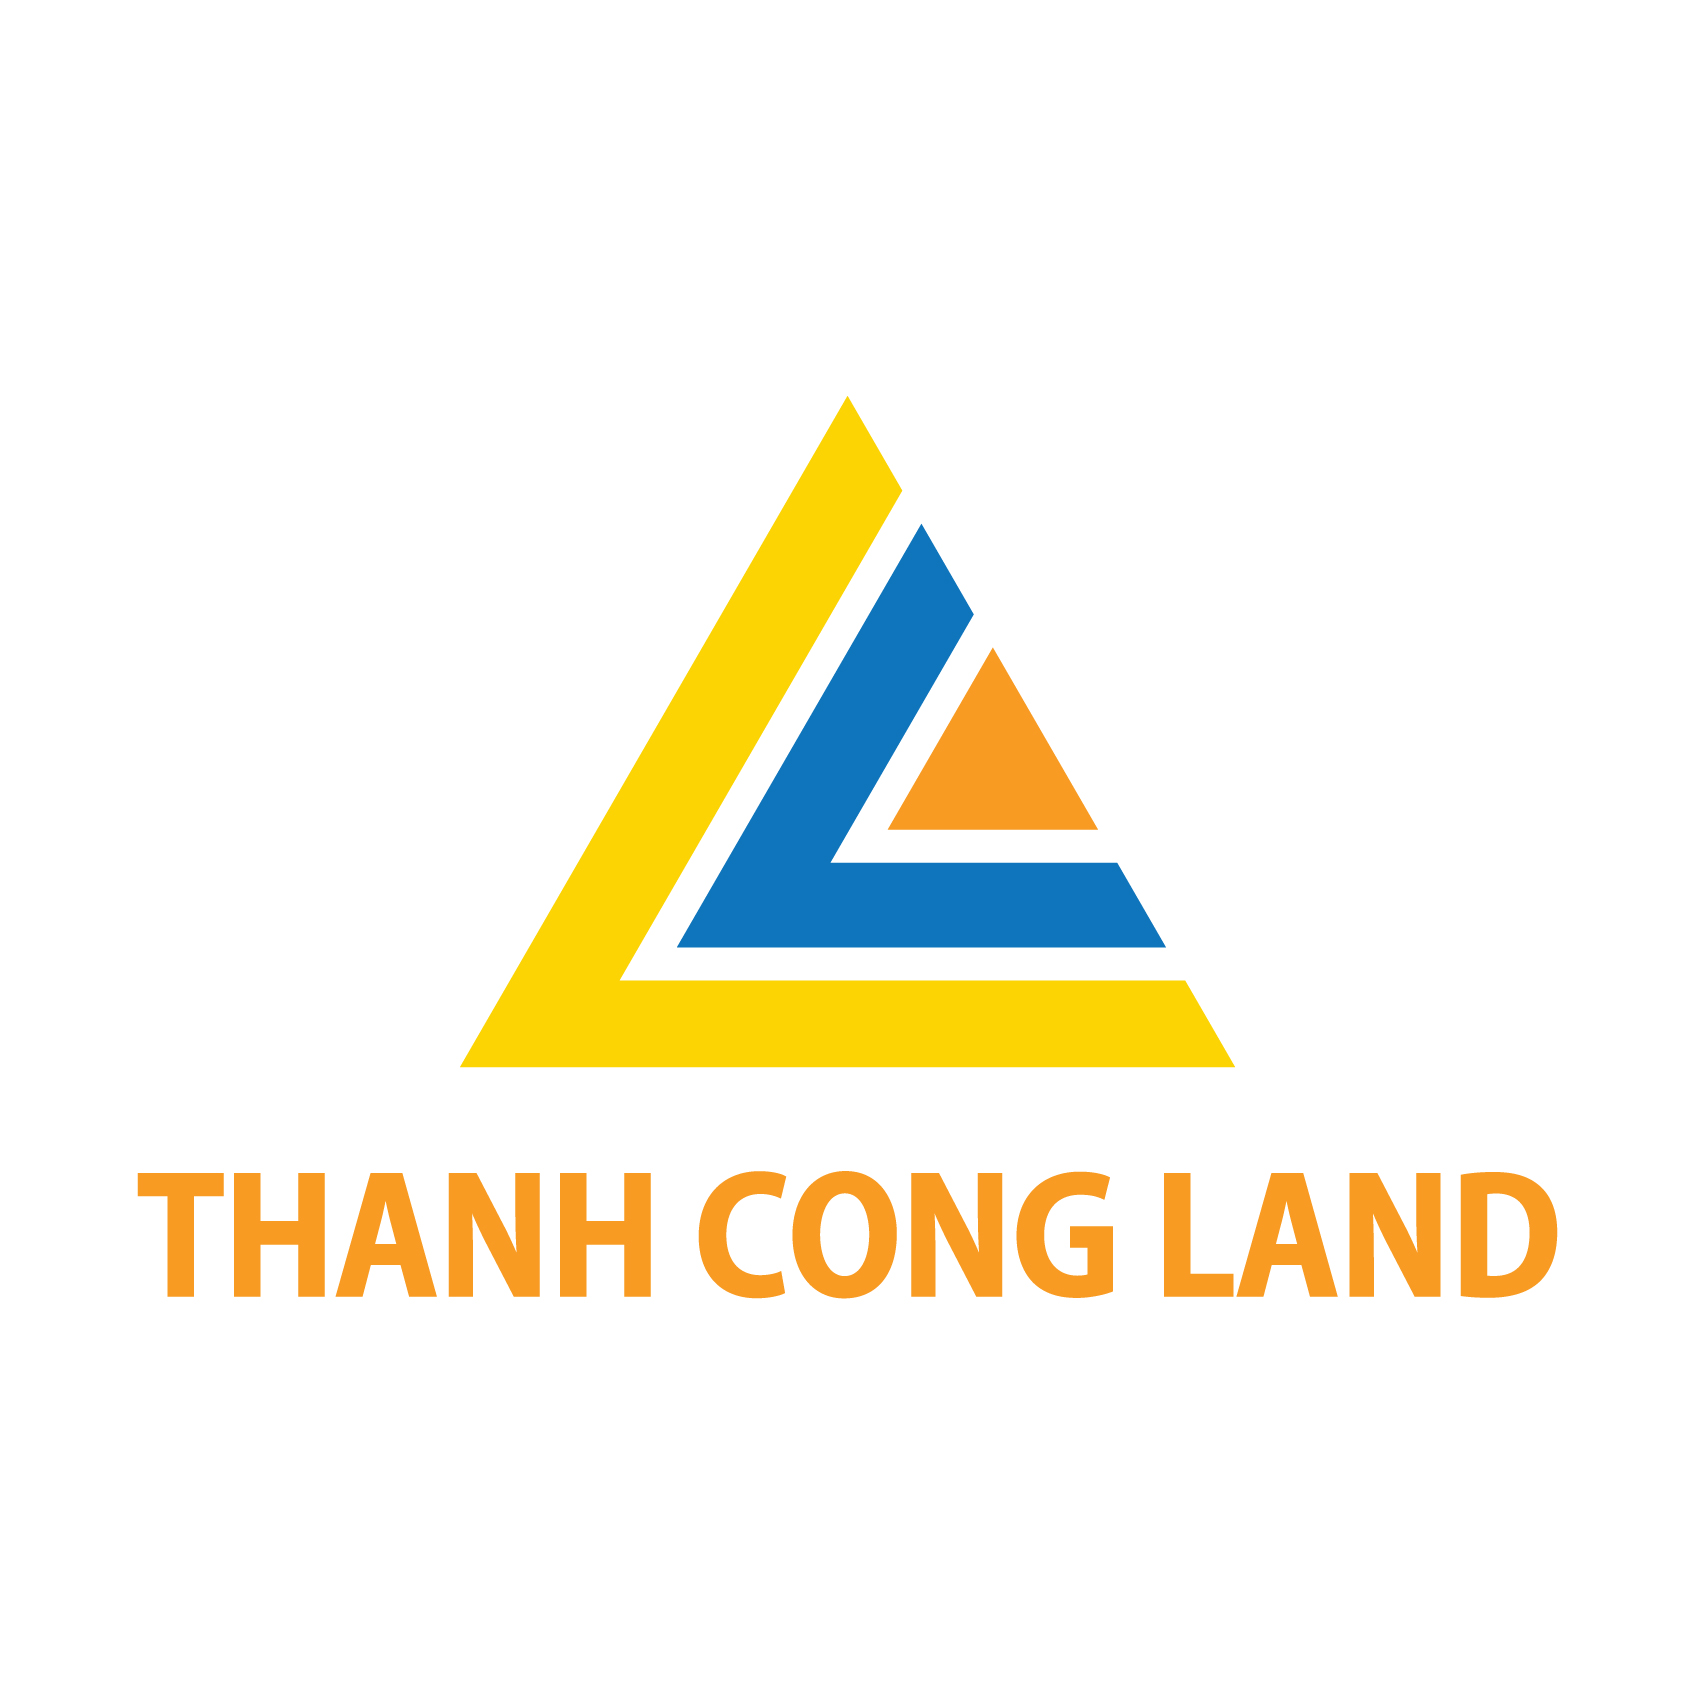 LOGO THANH CONG LAND - JPG